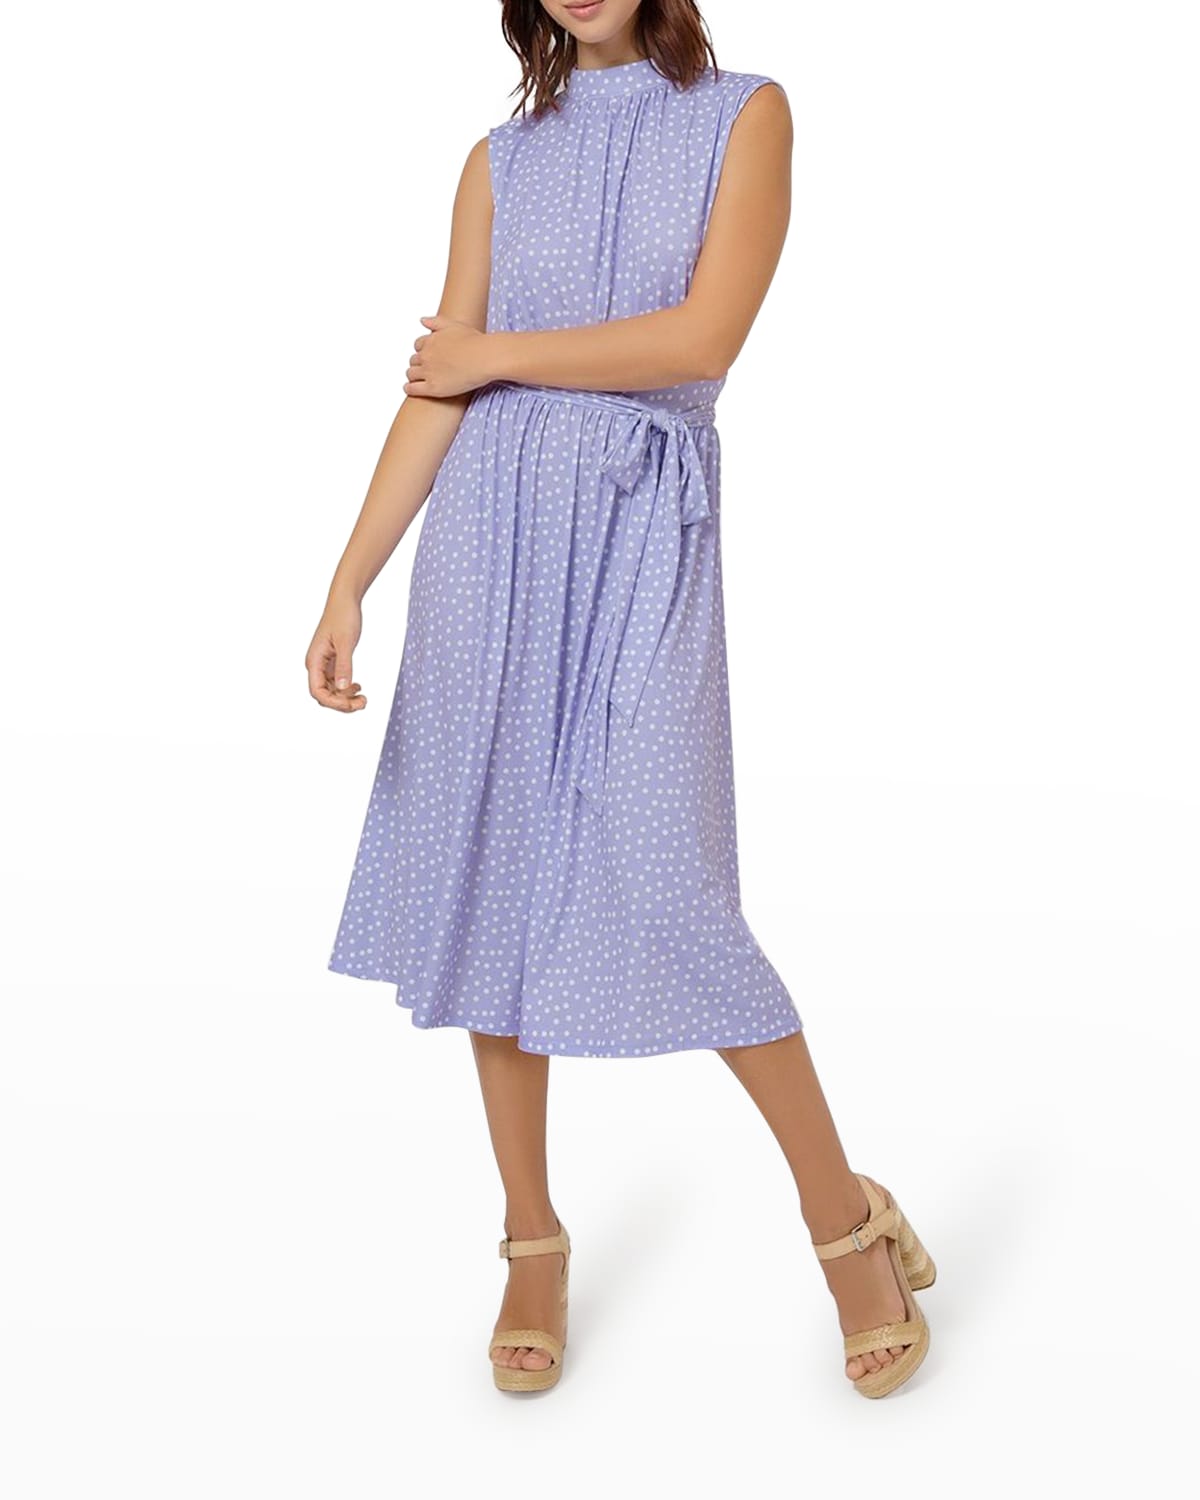 Leota Mindy Printed Sleeveless Midi Dress